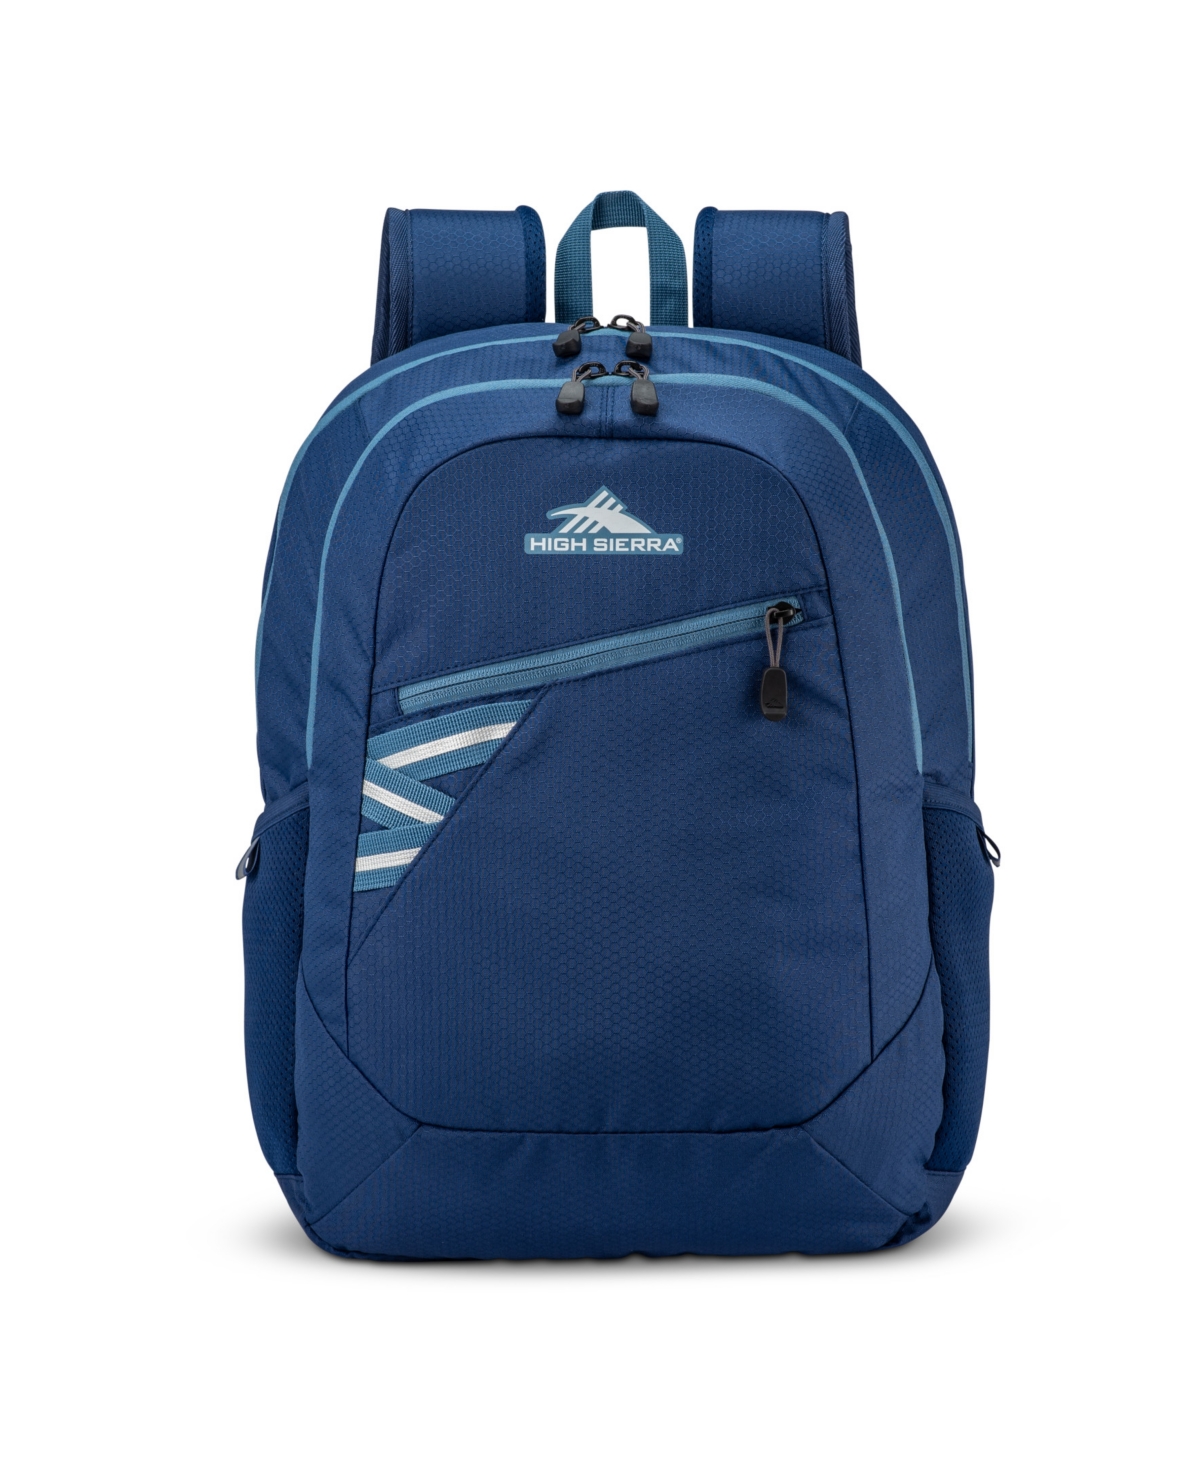 High Sierra Outburst Backpack In Graphite Blue/true Navy